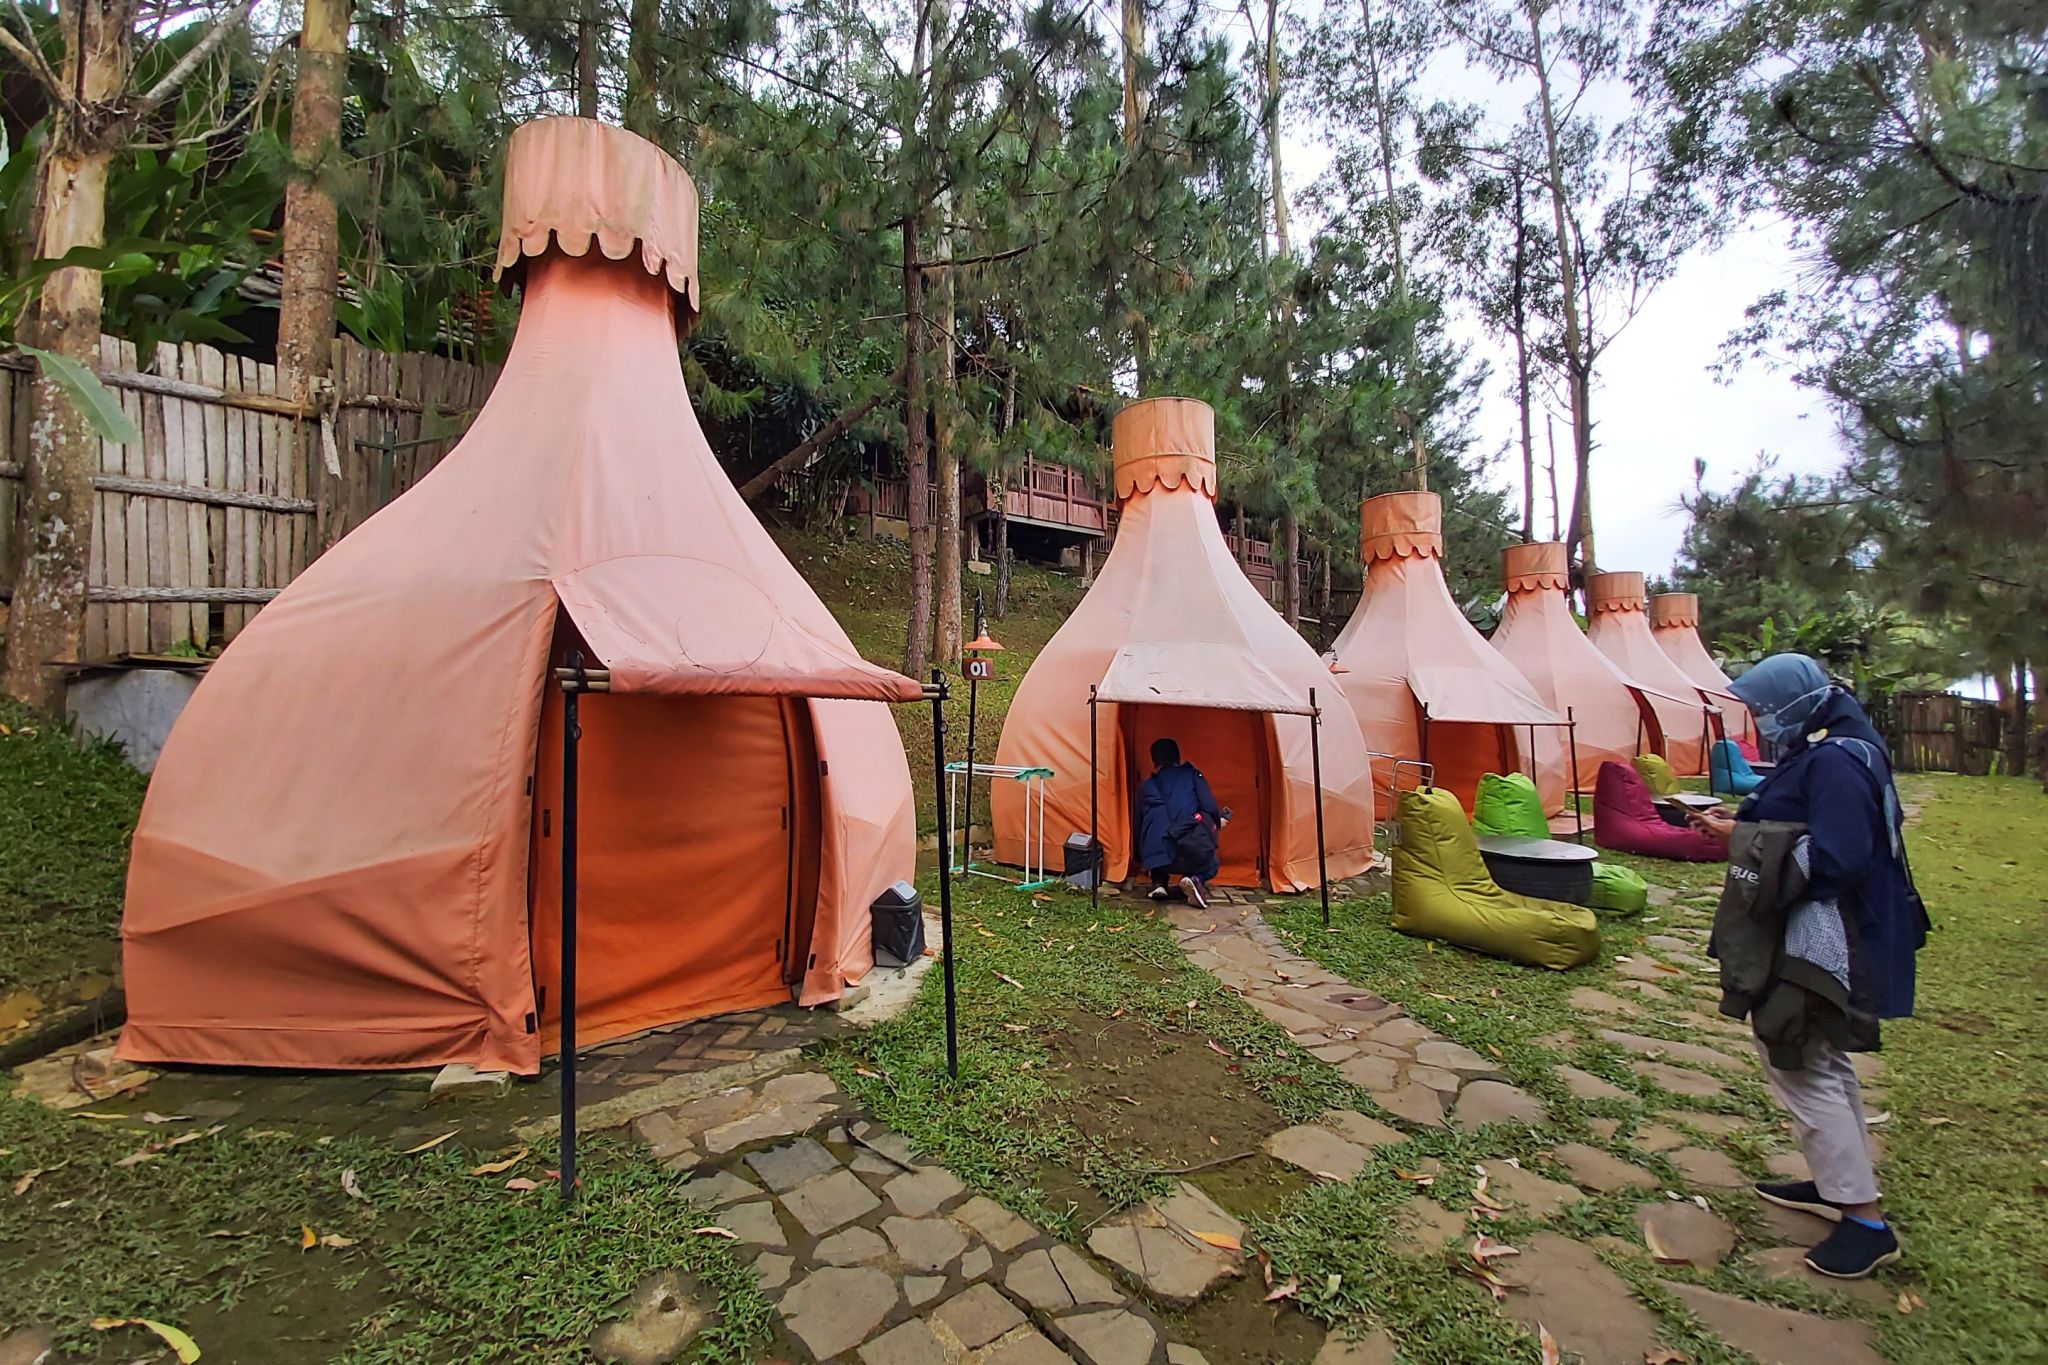 DUA orang pengunjung melihat-lihat The Lodge Camp and Village di kawasan The Lodge Maribaya, KBB, Rabu 8 Juli 2020.*